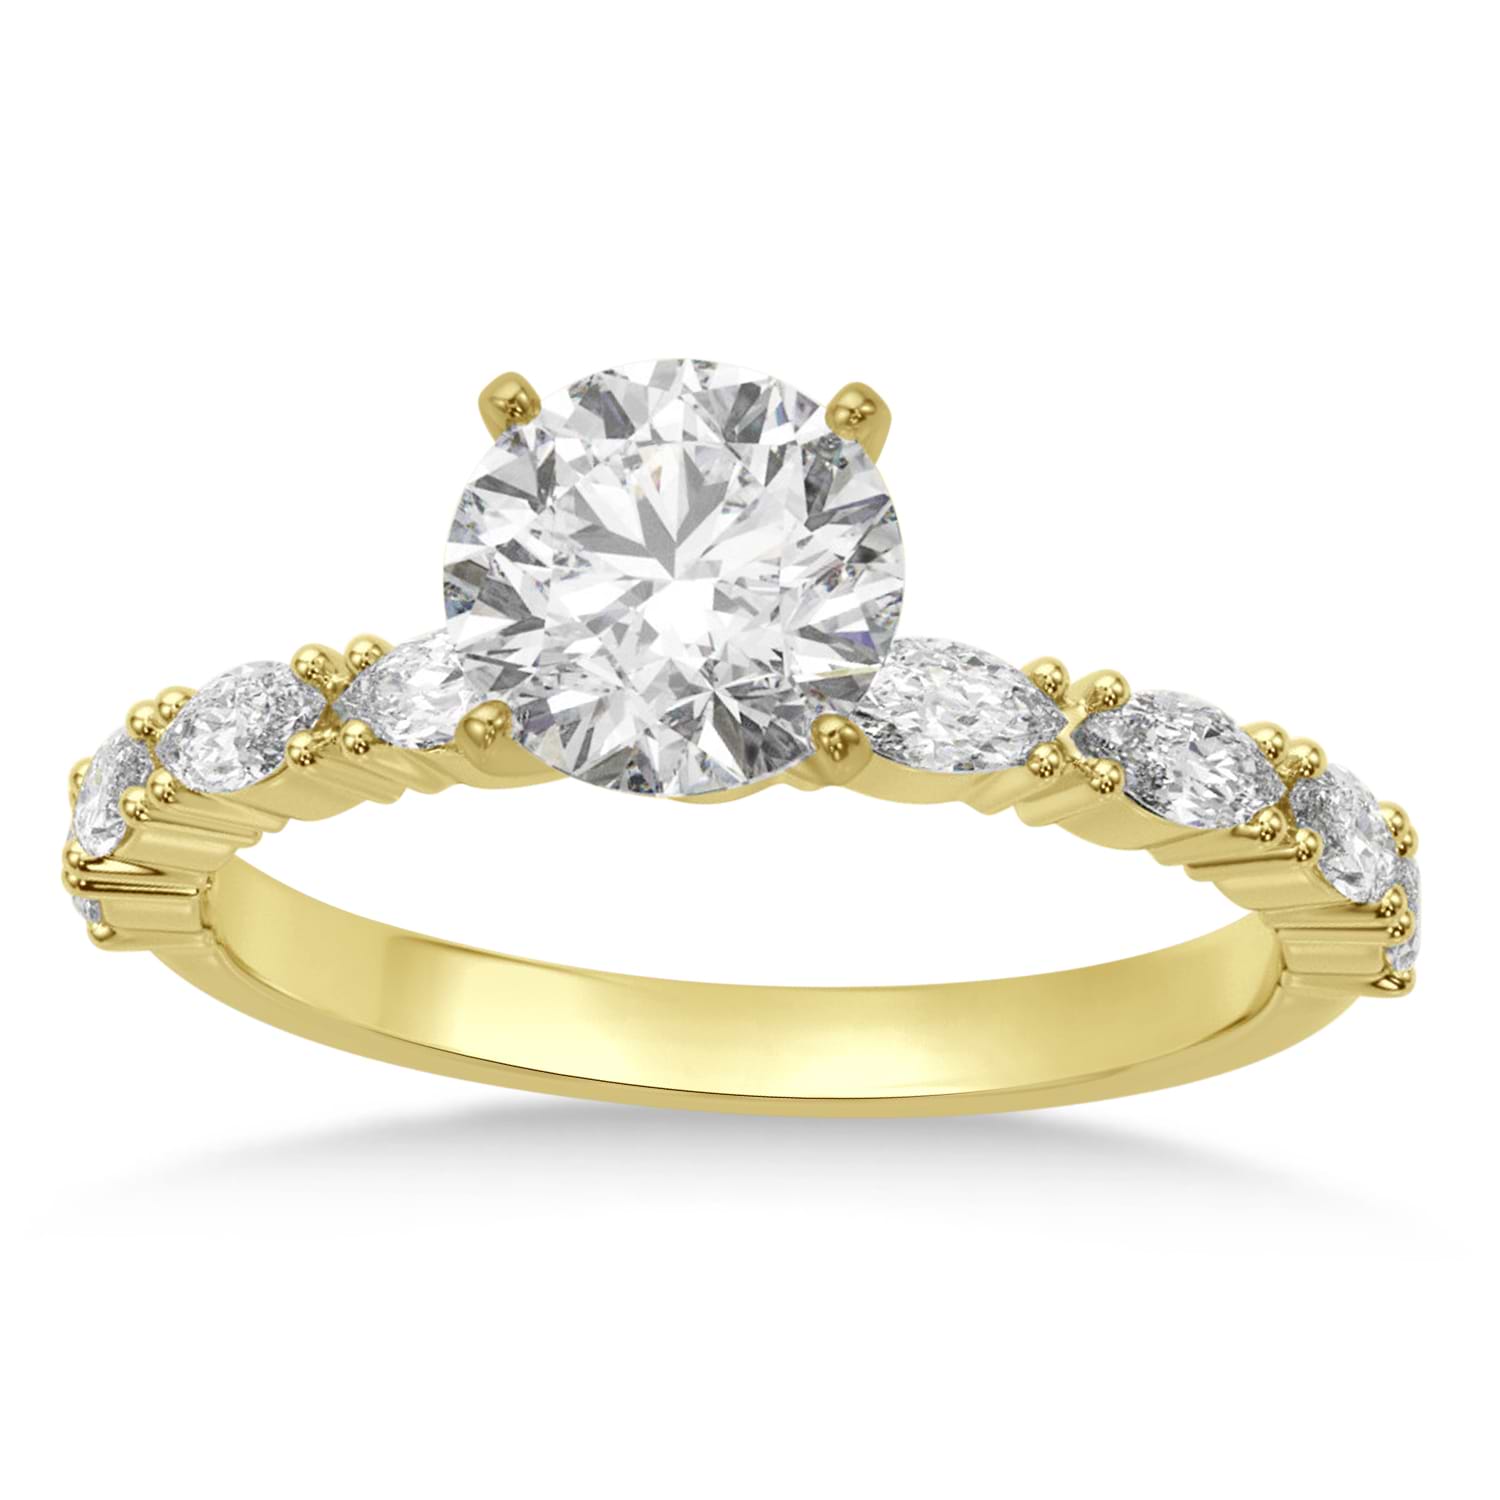 Diamond Marquise Engagement Ring 14k Yellow Gold (0.63ct)